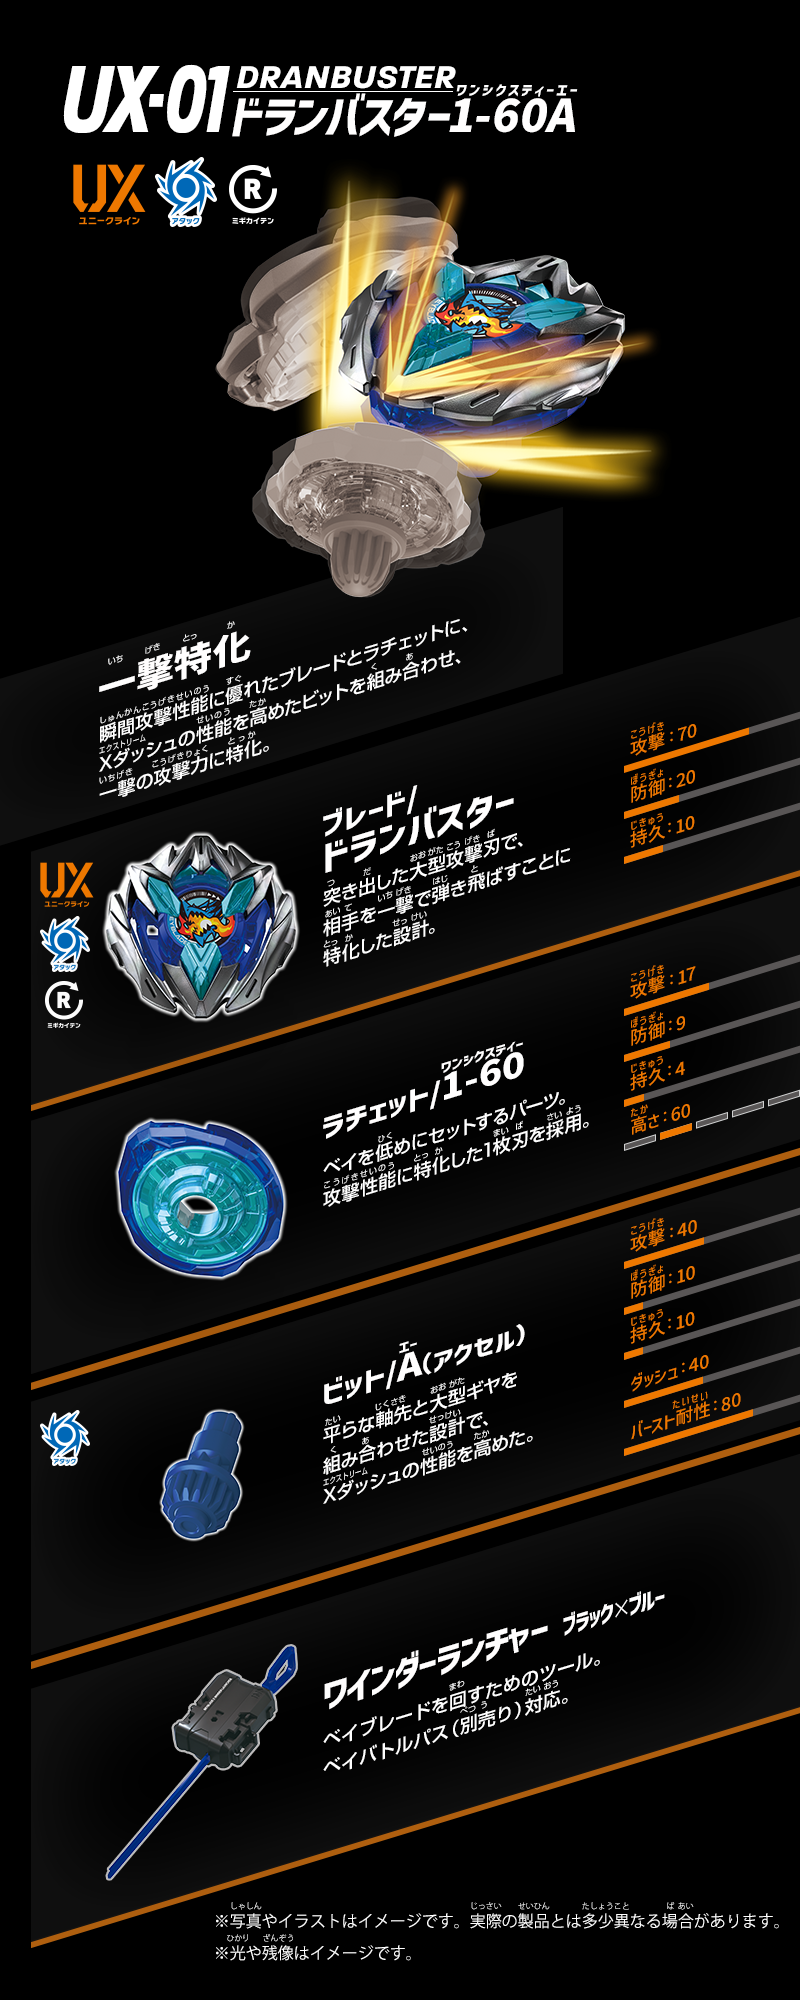 UX-01 スターター ドランバスター1-60A｜製品情報｜BEYBLADE X タカラ 